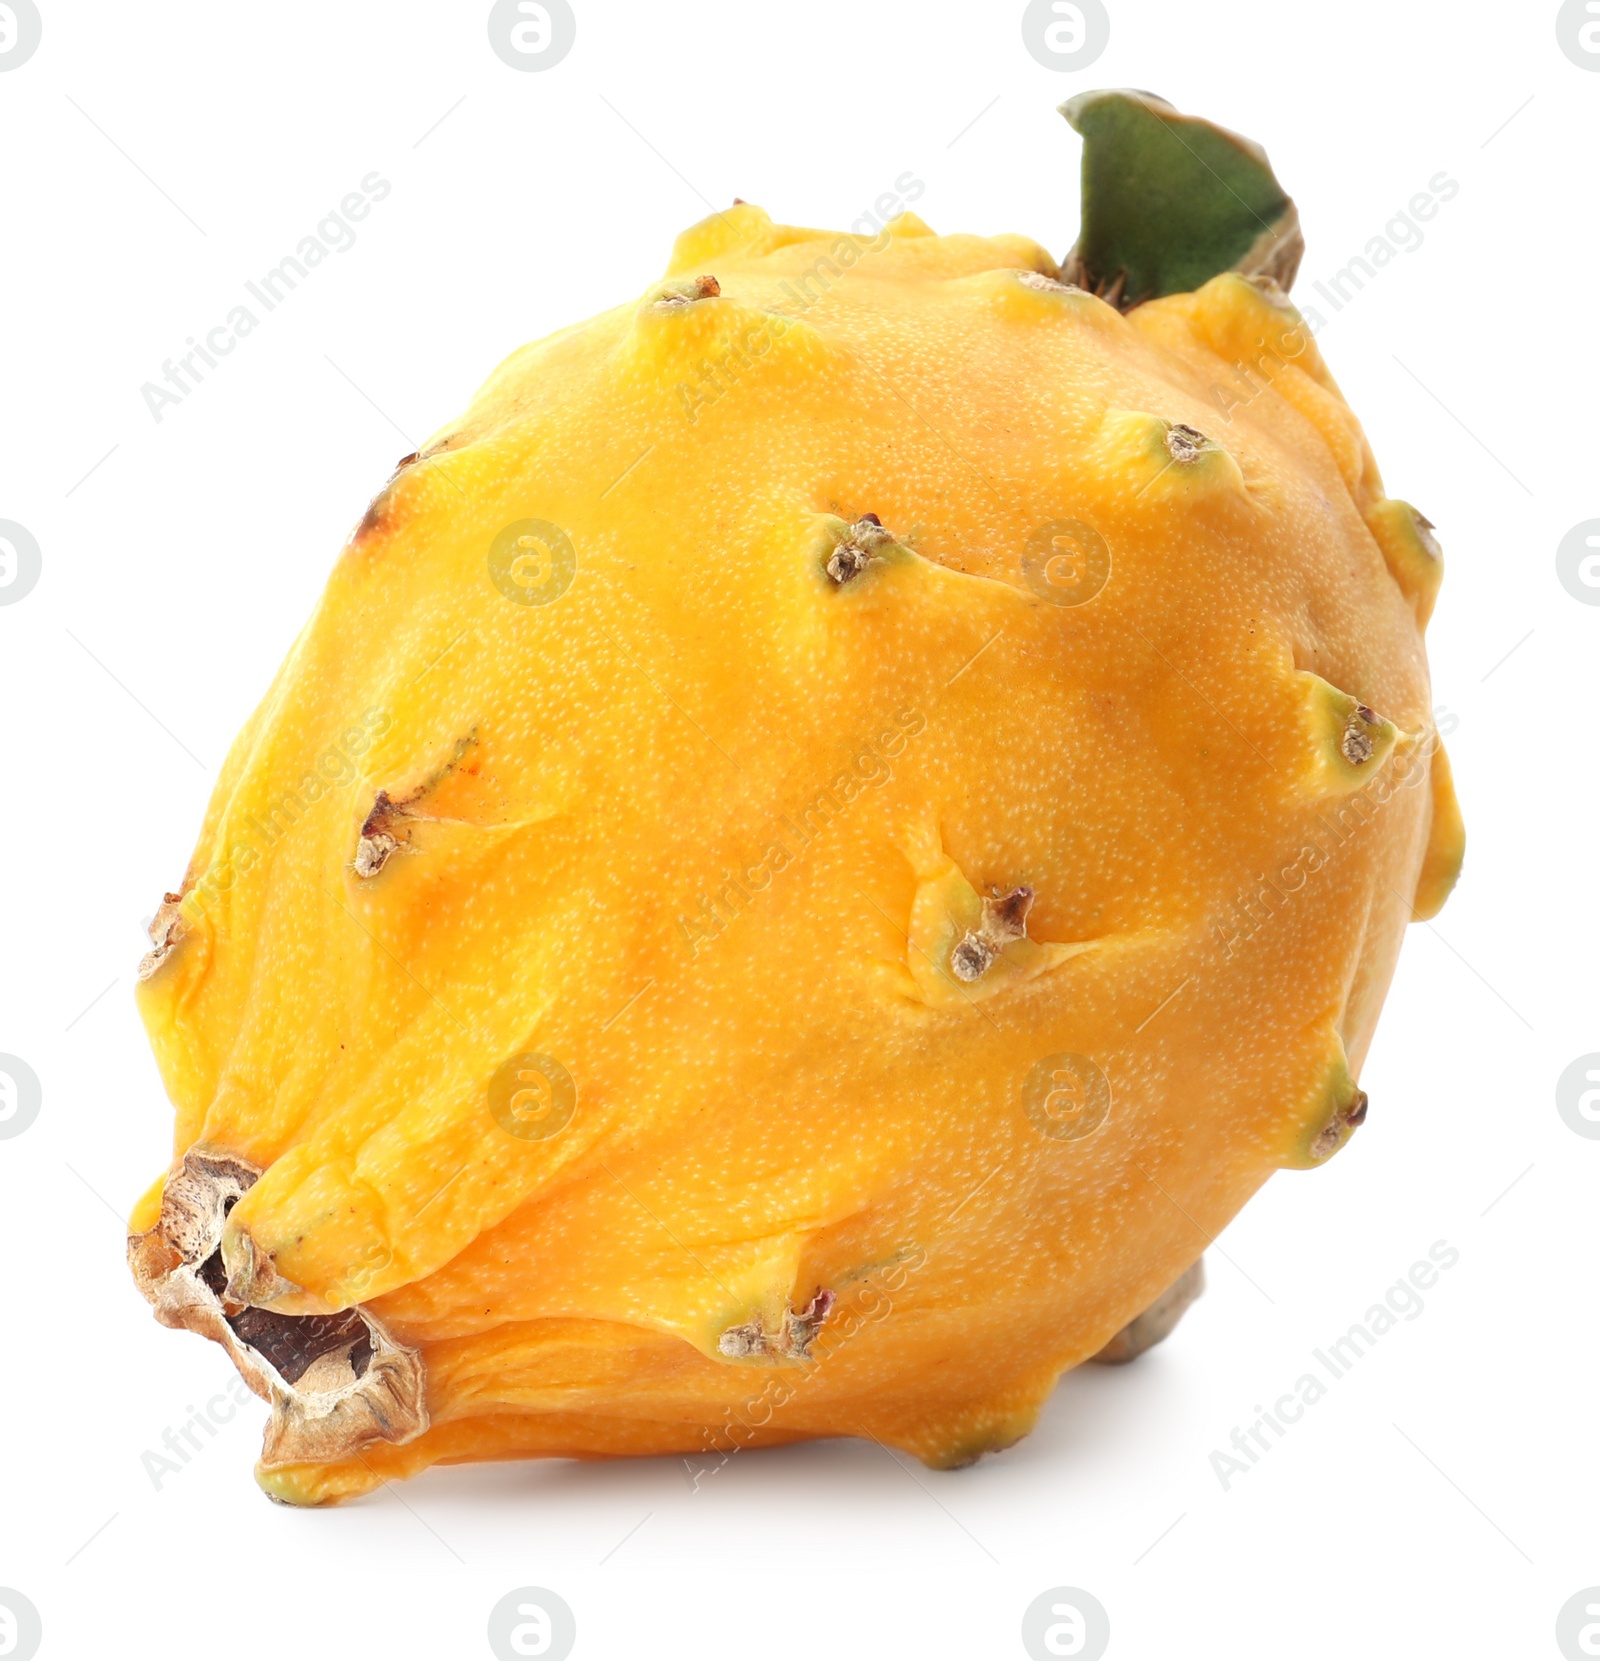 Photo of Delicious yellow dragon fruit (pitahaya) isolated on white